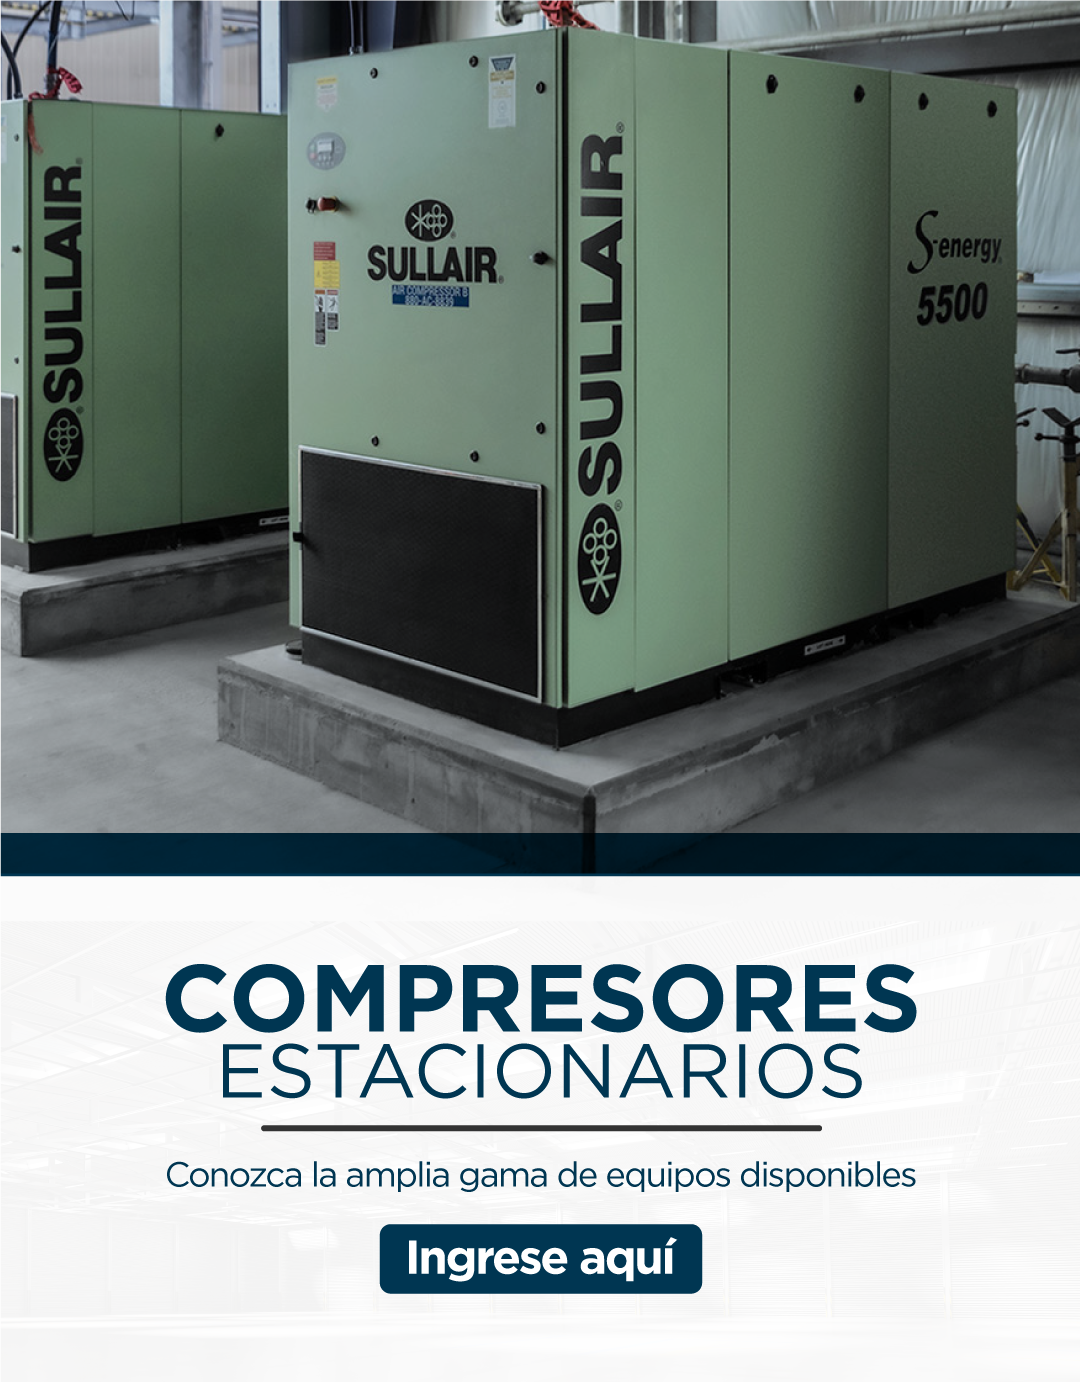 Compresores Estacionarios de Tornillo Lubricado Sullair - Ainsa Colombia